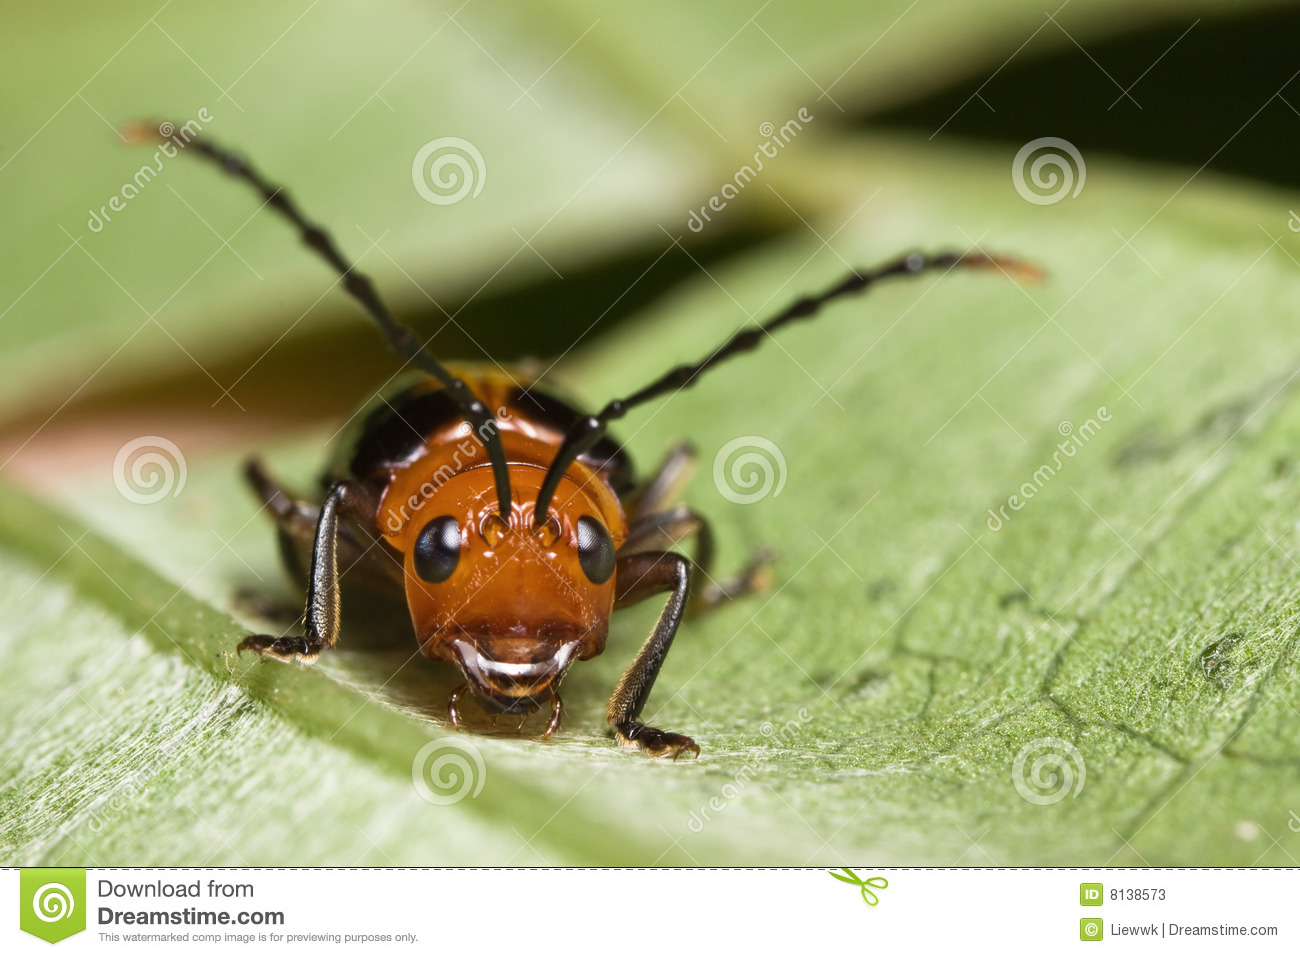 Cute Beetle Face Stock Photos   Image  8138573